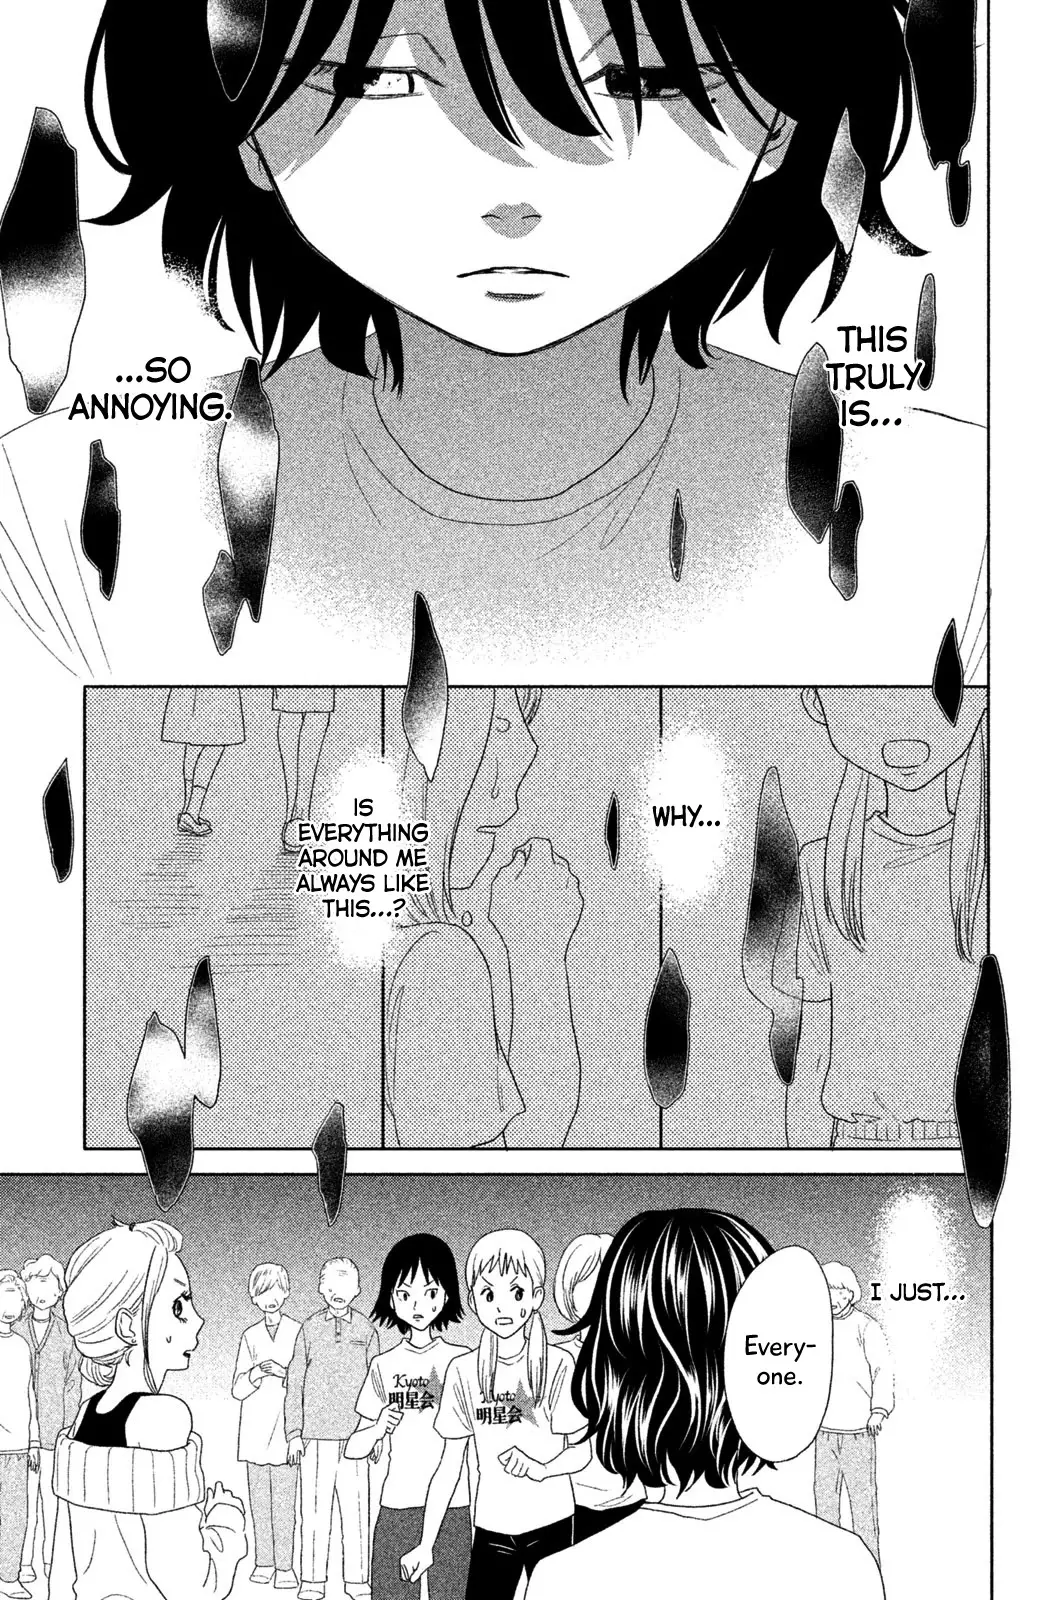 Chihayafuru: Middle School Arc - 11 page 26